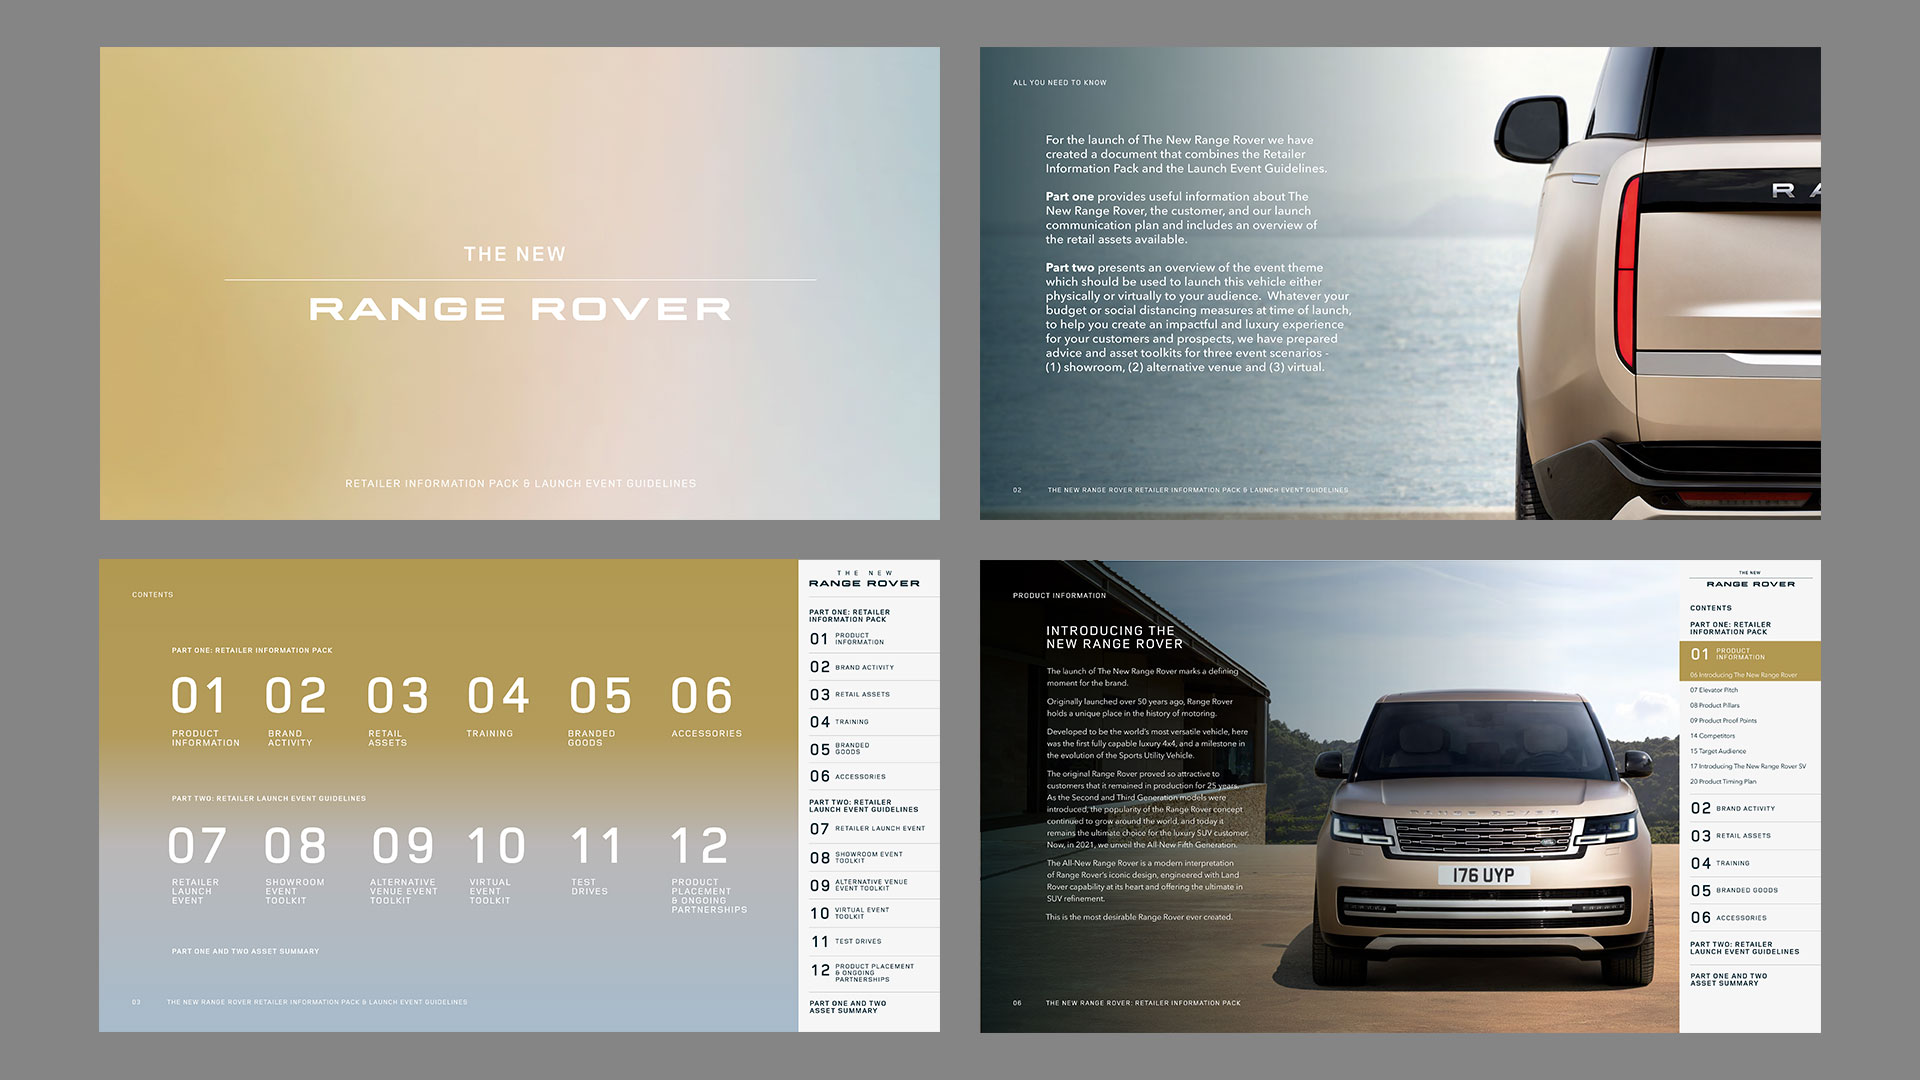 JLR - New Range Rover global launch retailer info & event guidelines